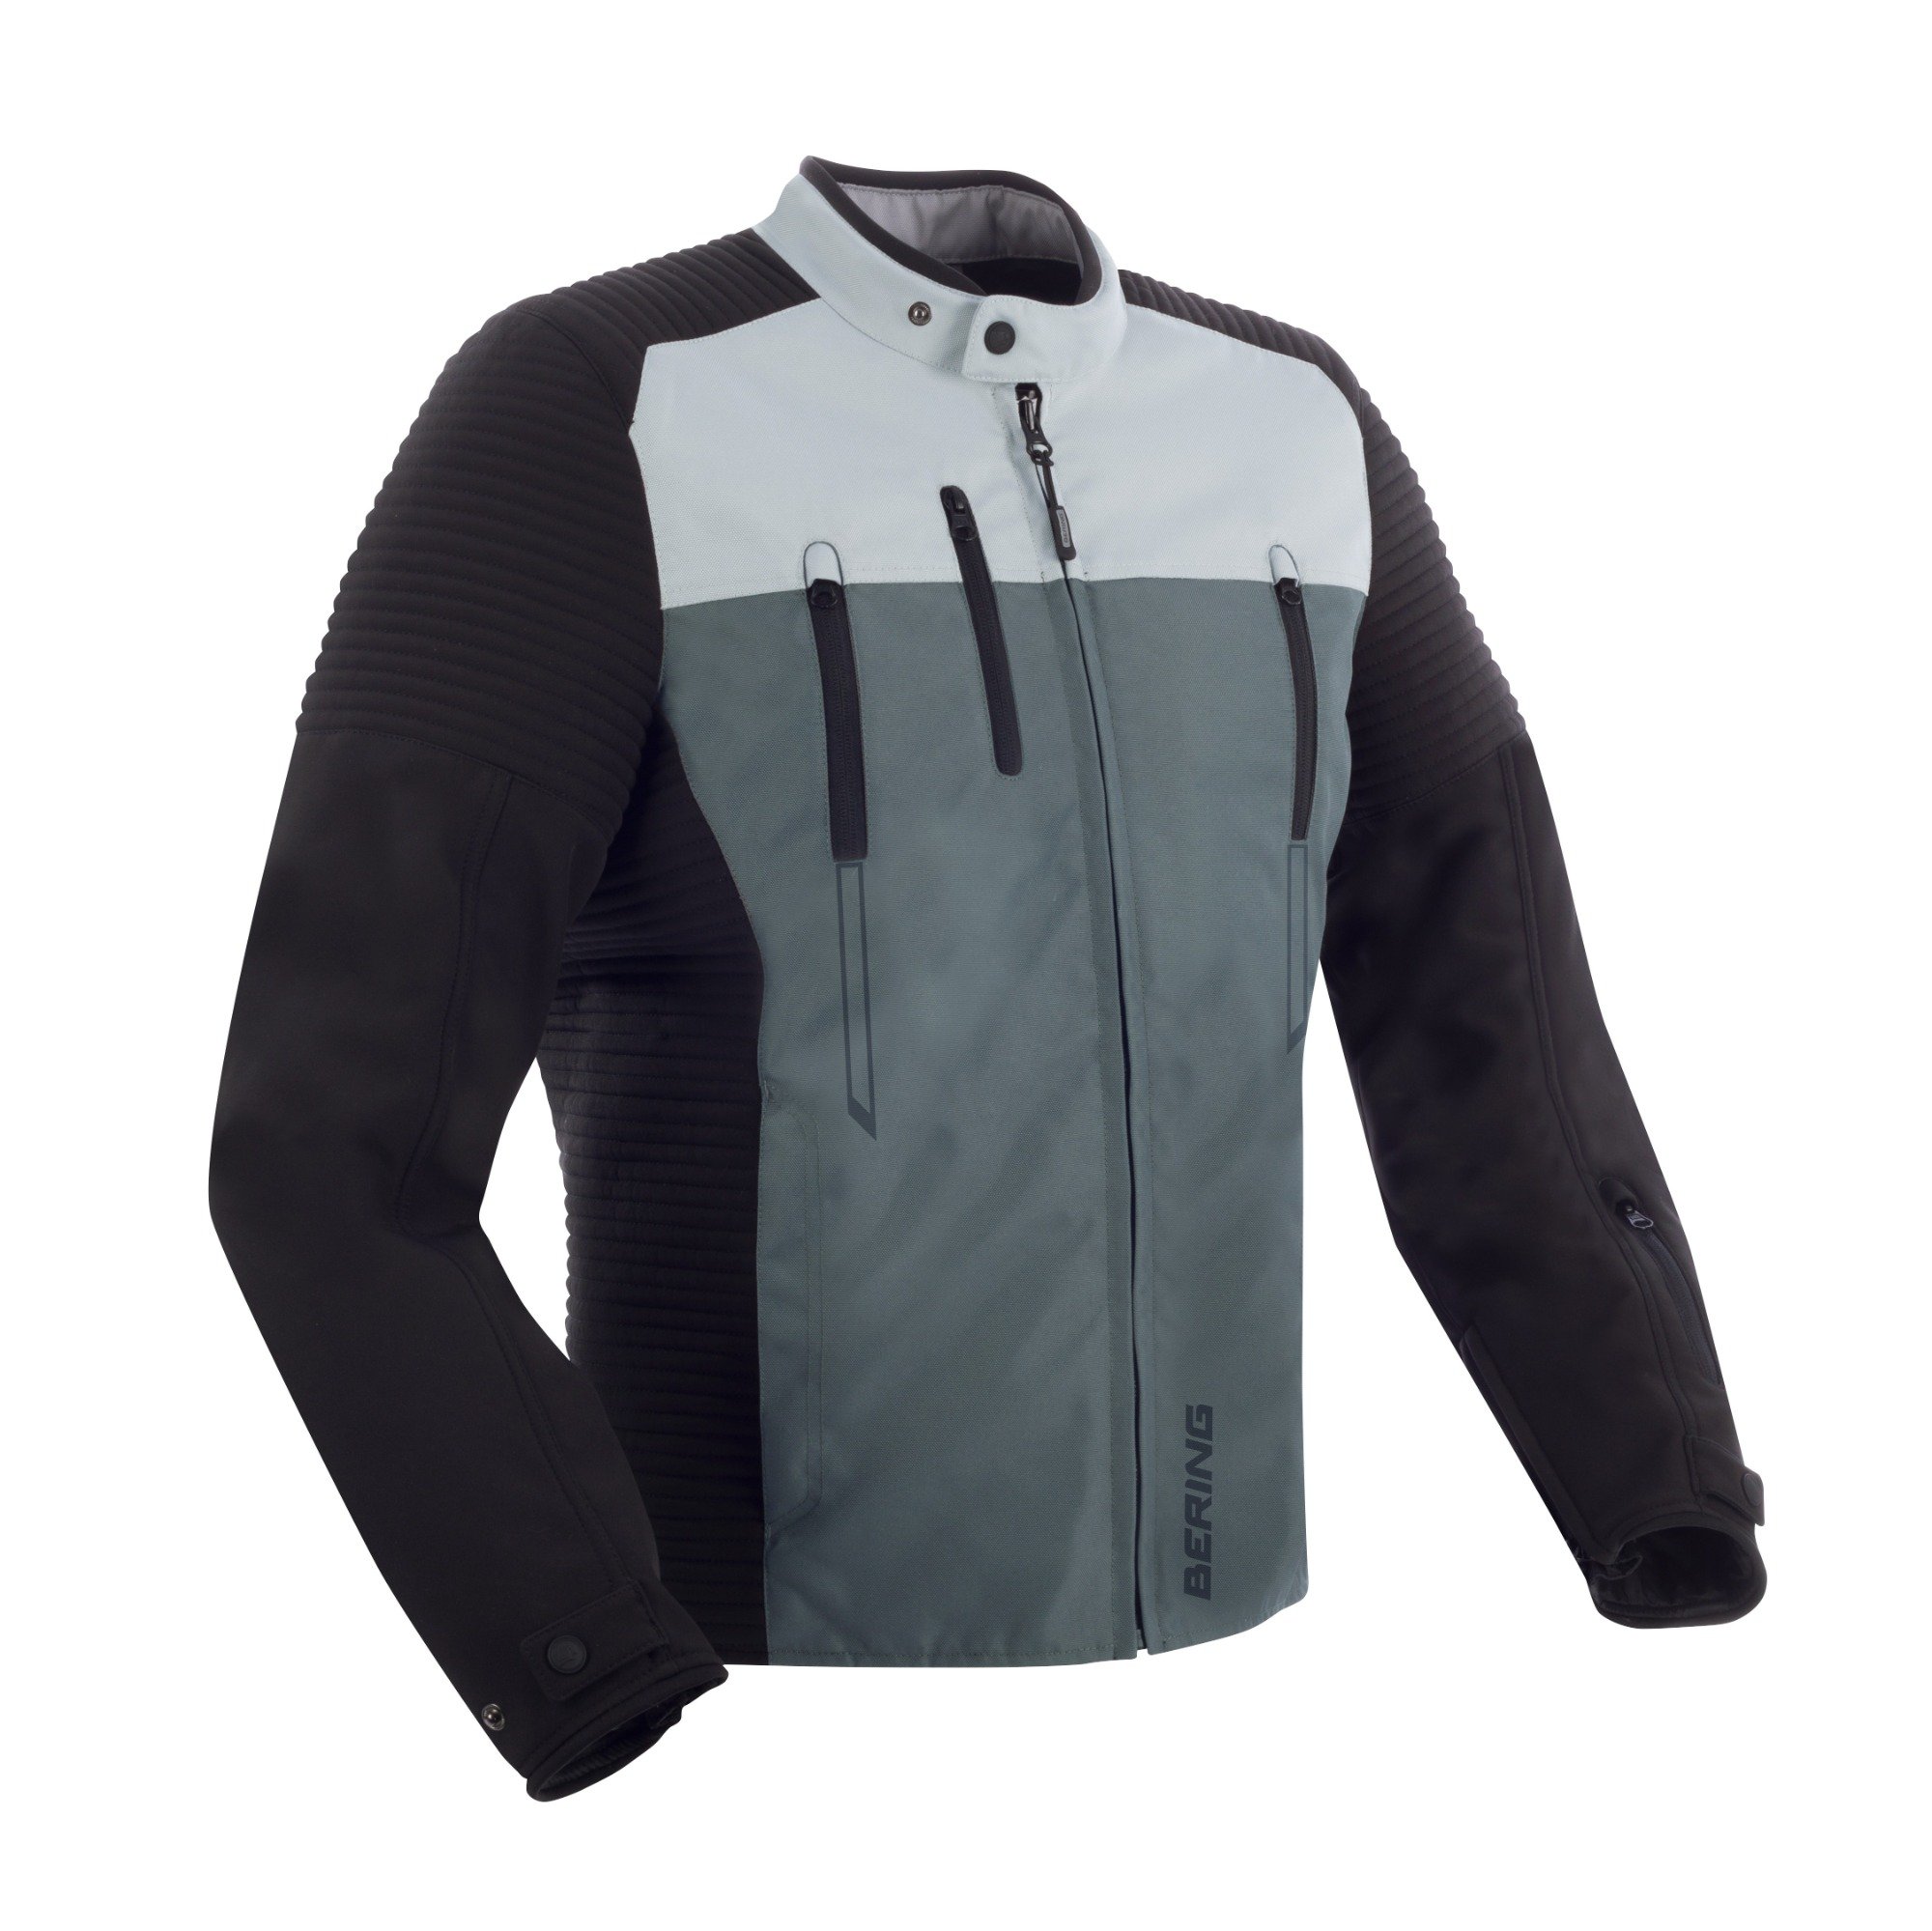 Image of Bering Crosser Jacket Gray Black Size XL ID 3660815169001